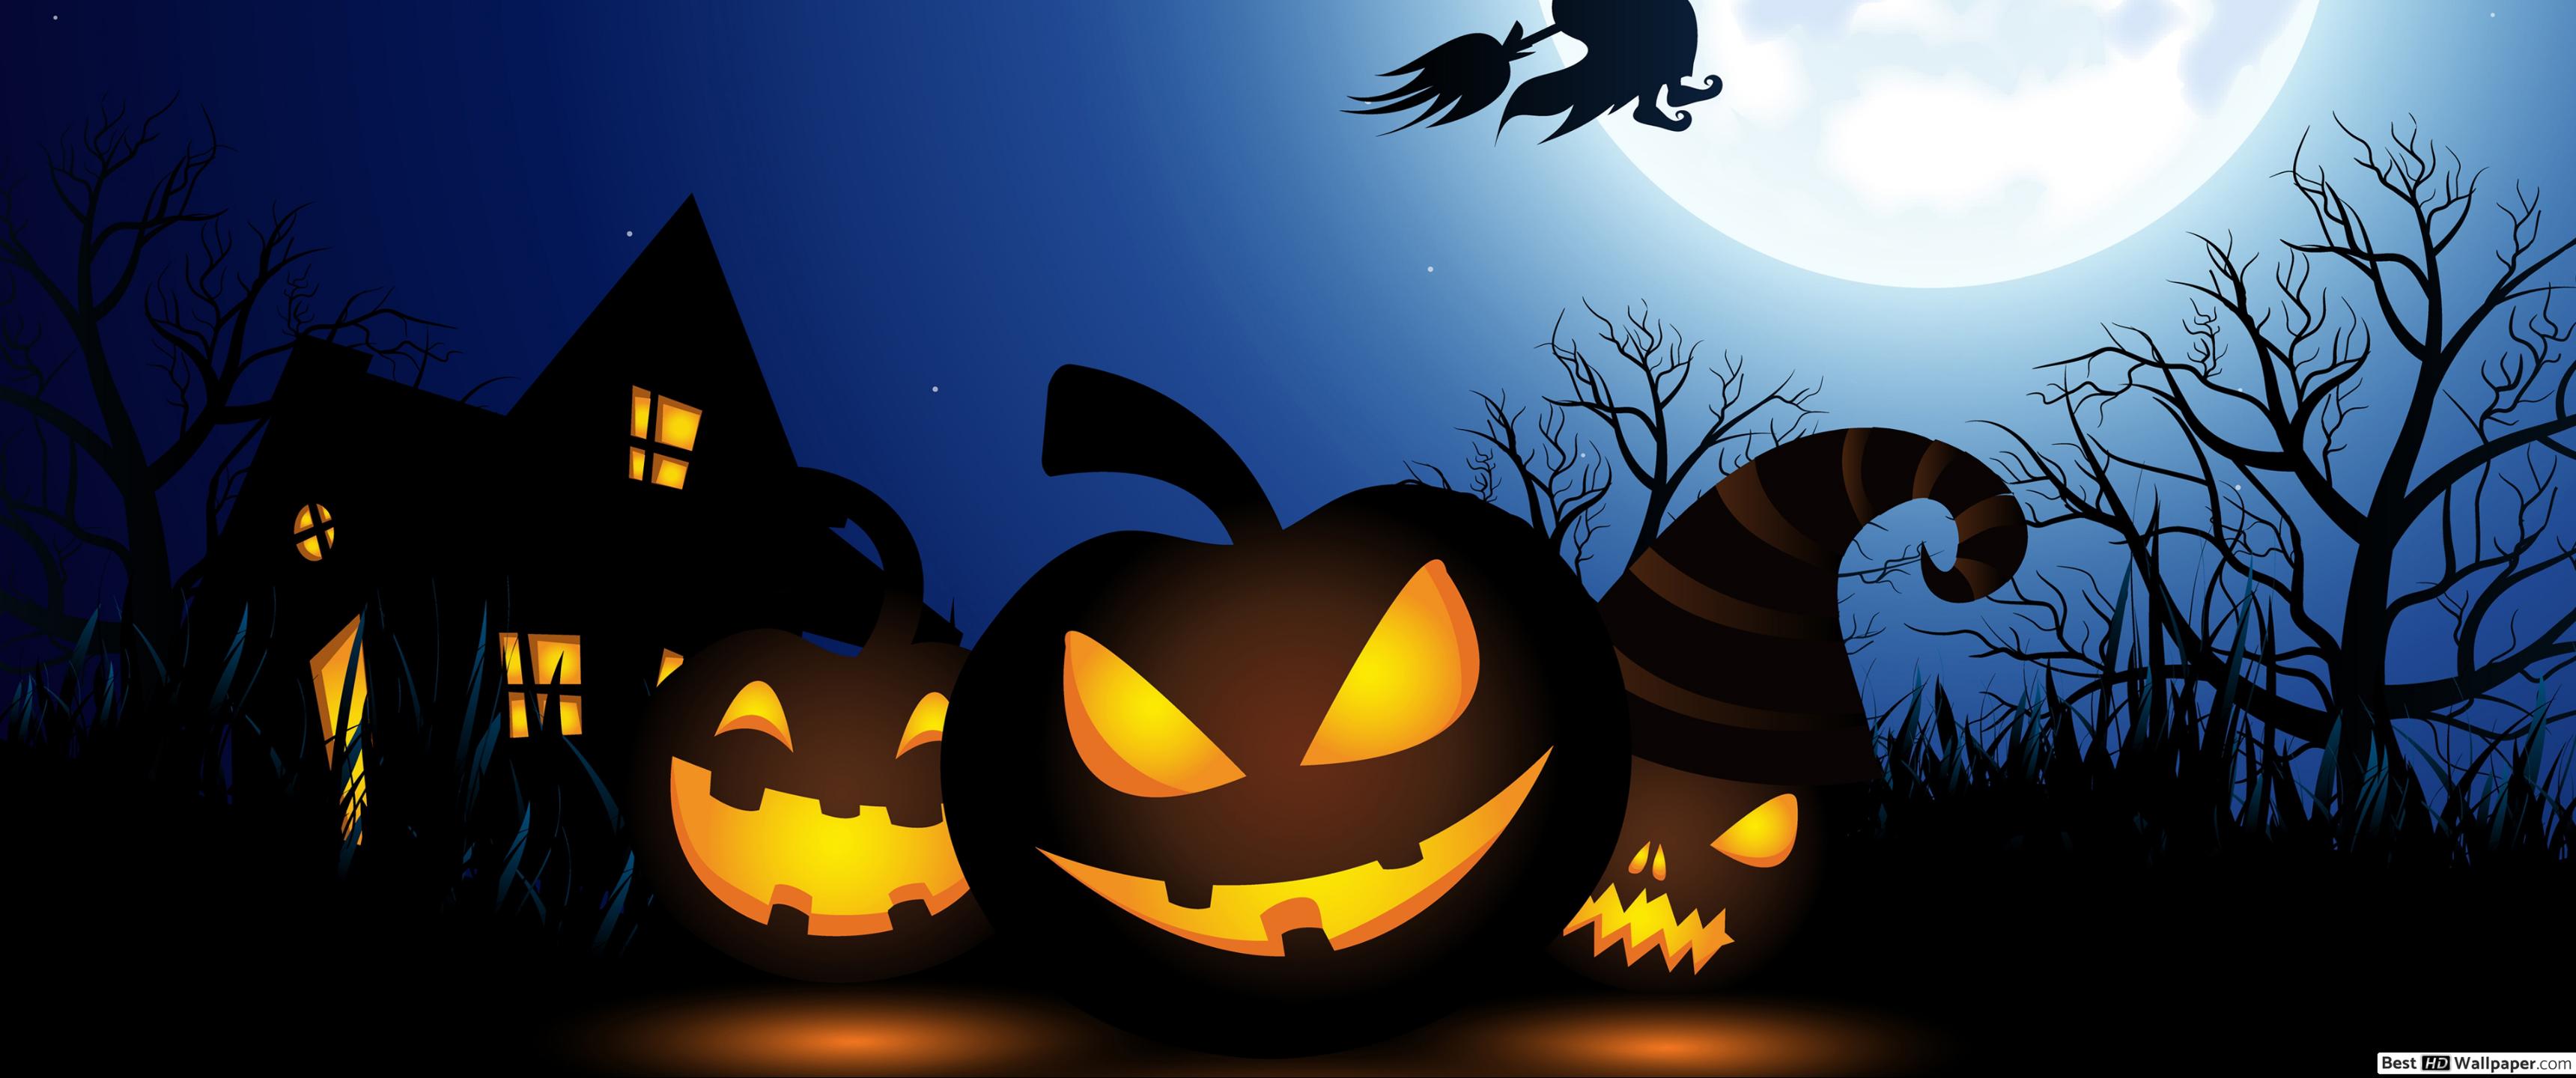 Spooky Halloween Witch HD wallpaper download